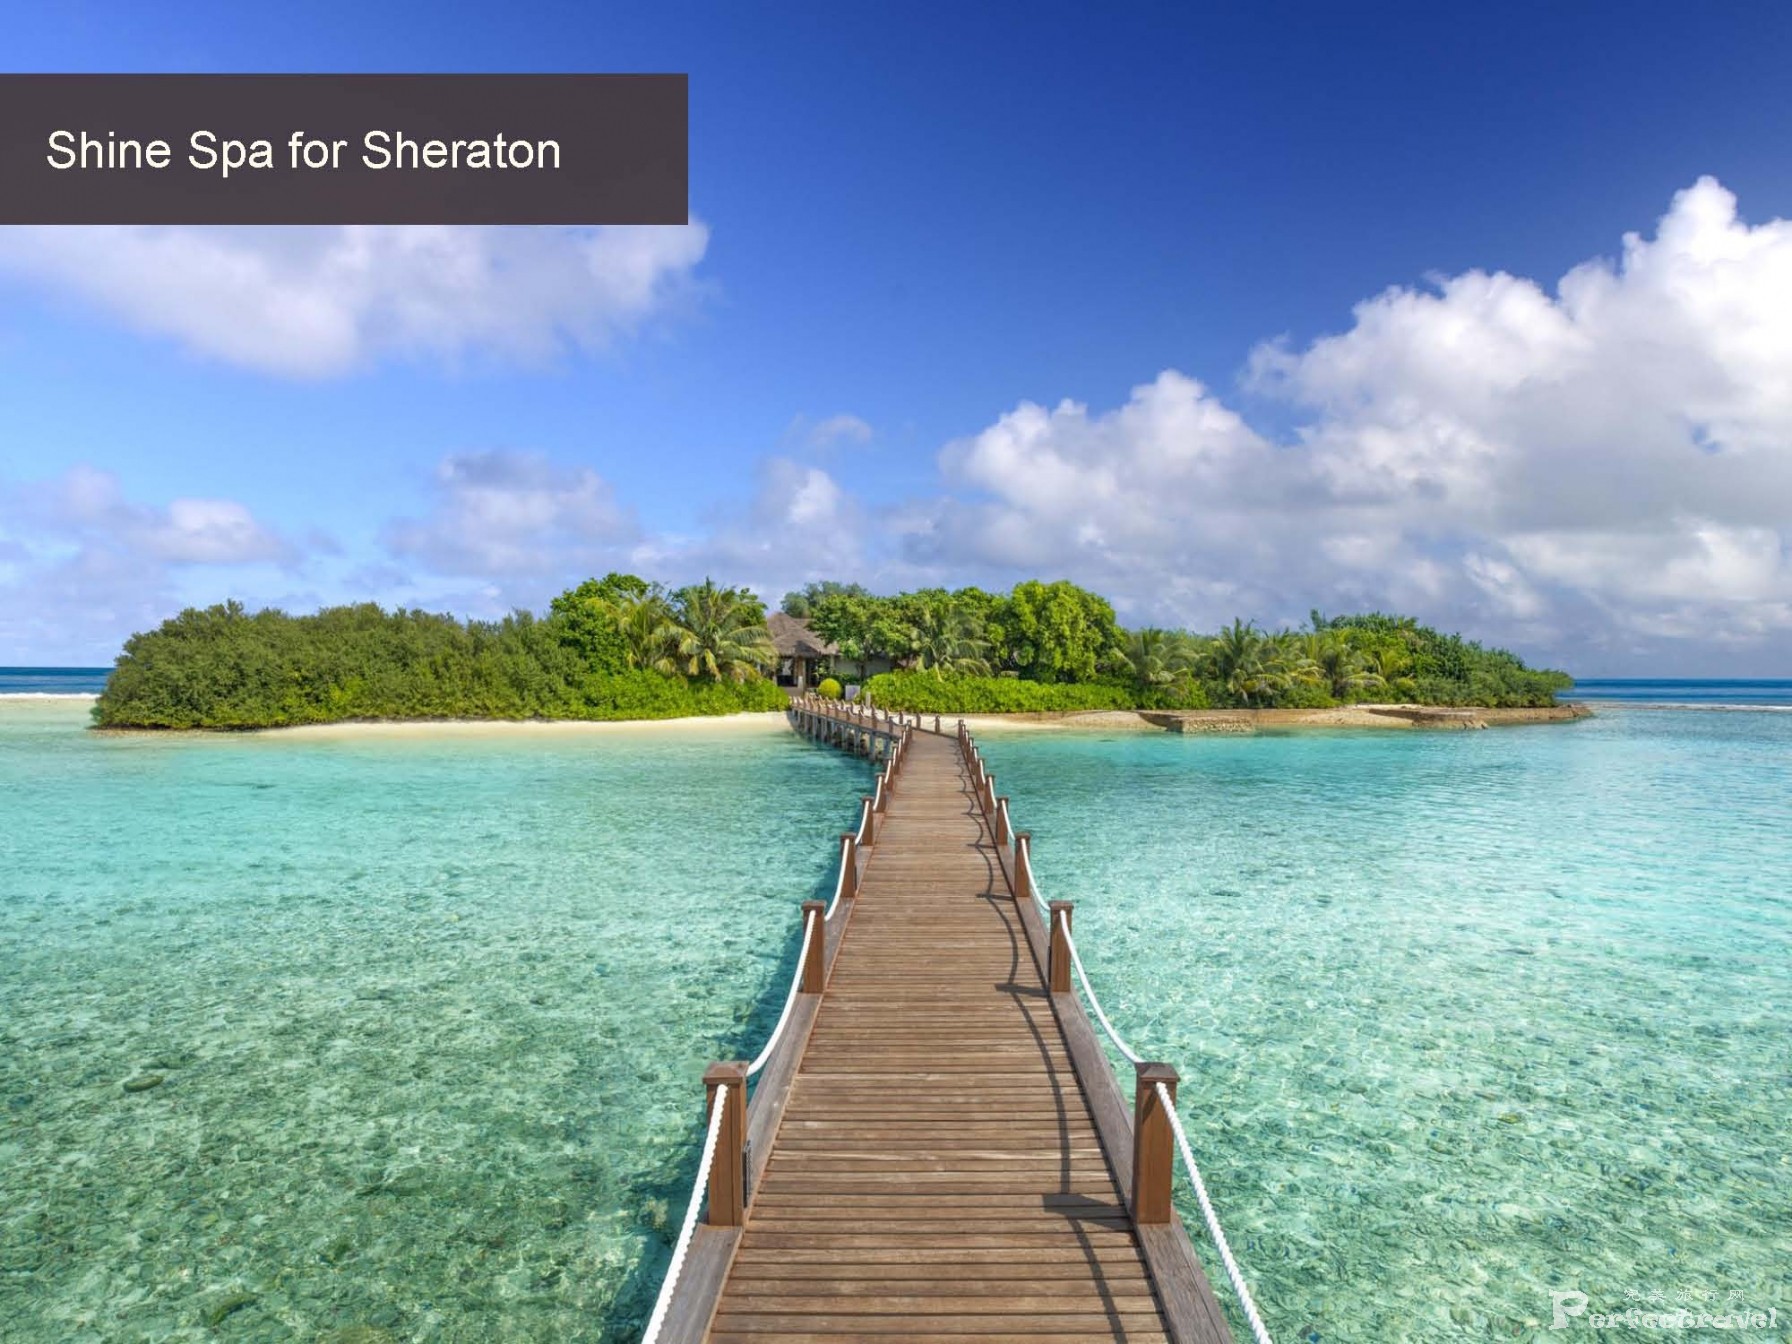 Sheraton Maldives - Overview Presentation 2015_Page_29.jpg